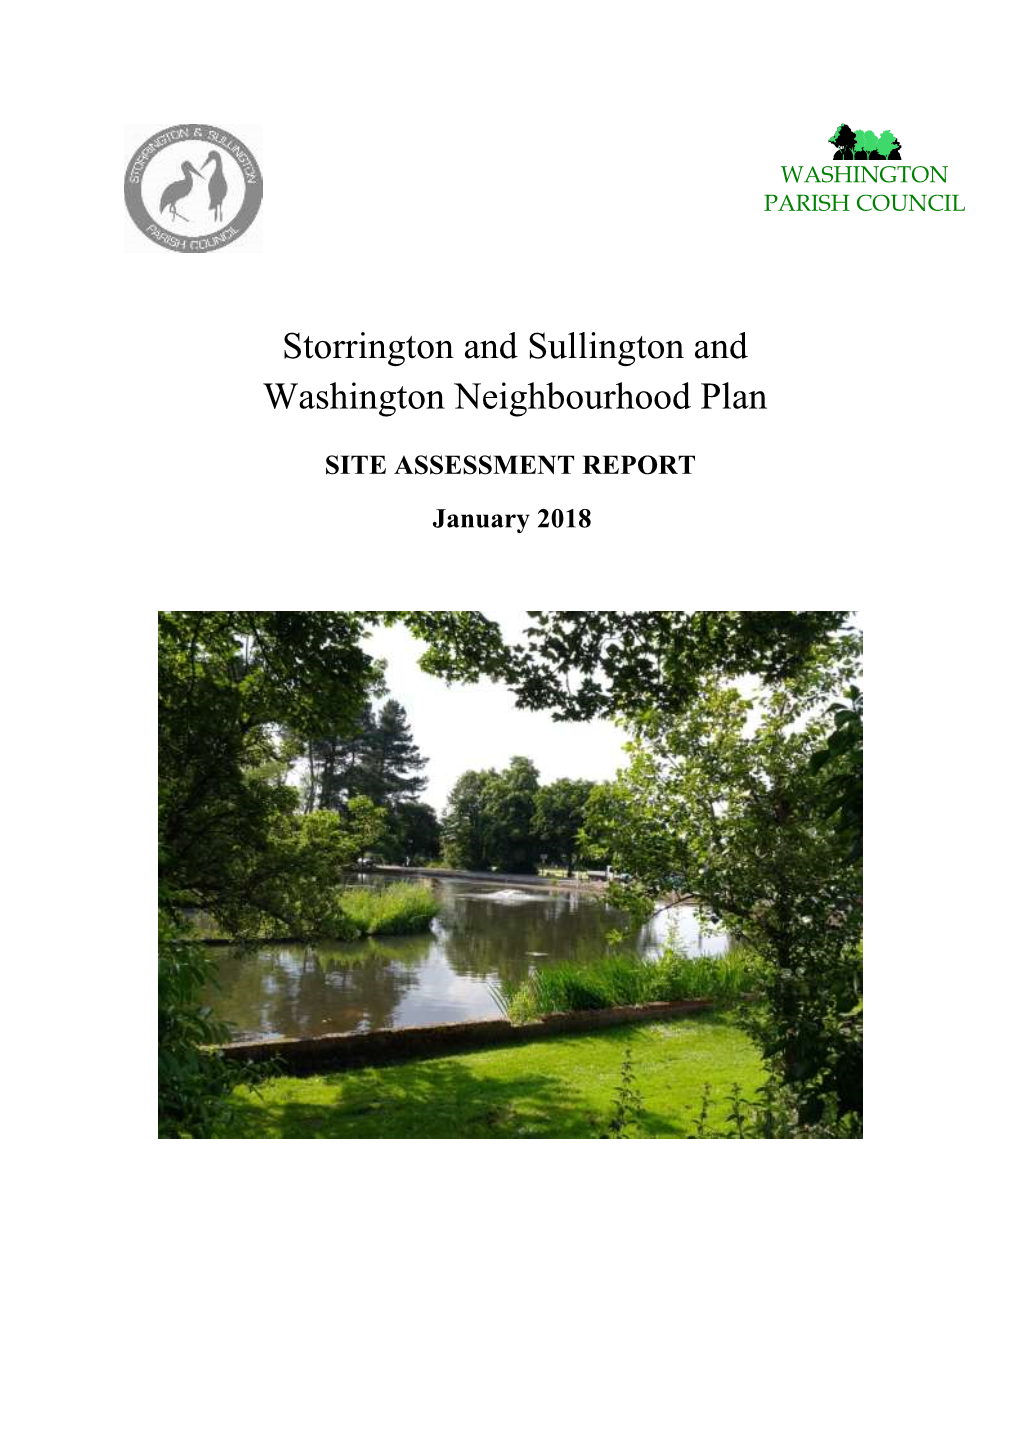 Storrington and Sullington and Washington Neighbourhood Plan